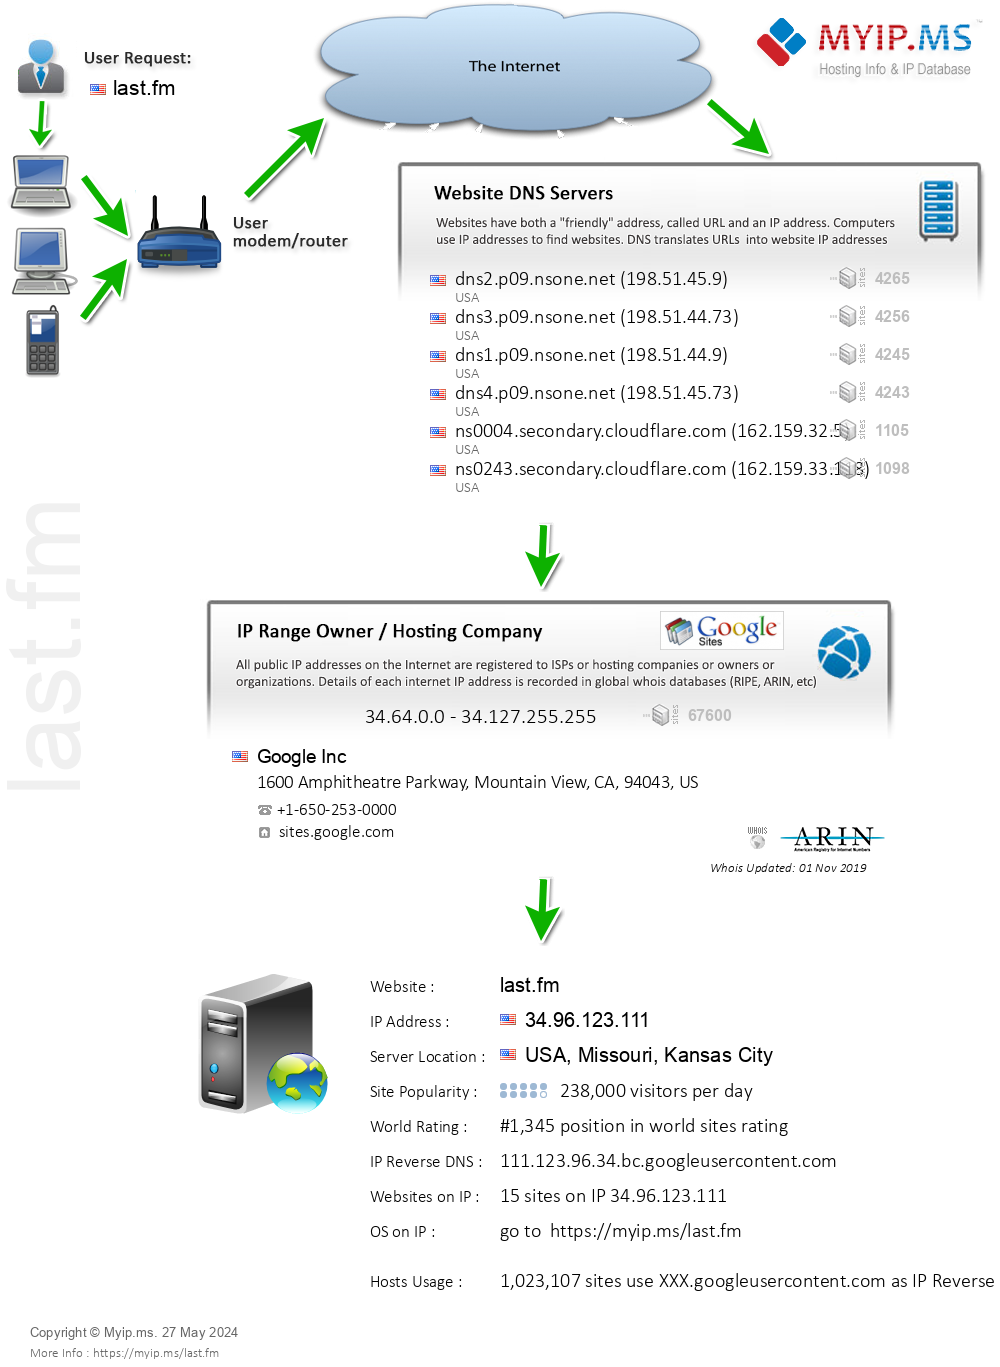 Last.fm - Website Hosting Visual IP Diagram